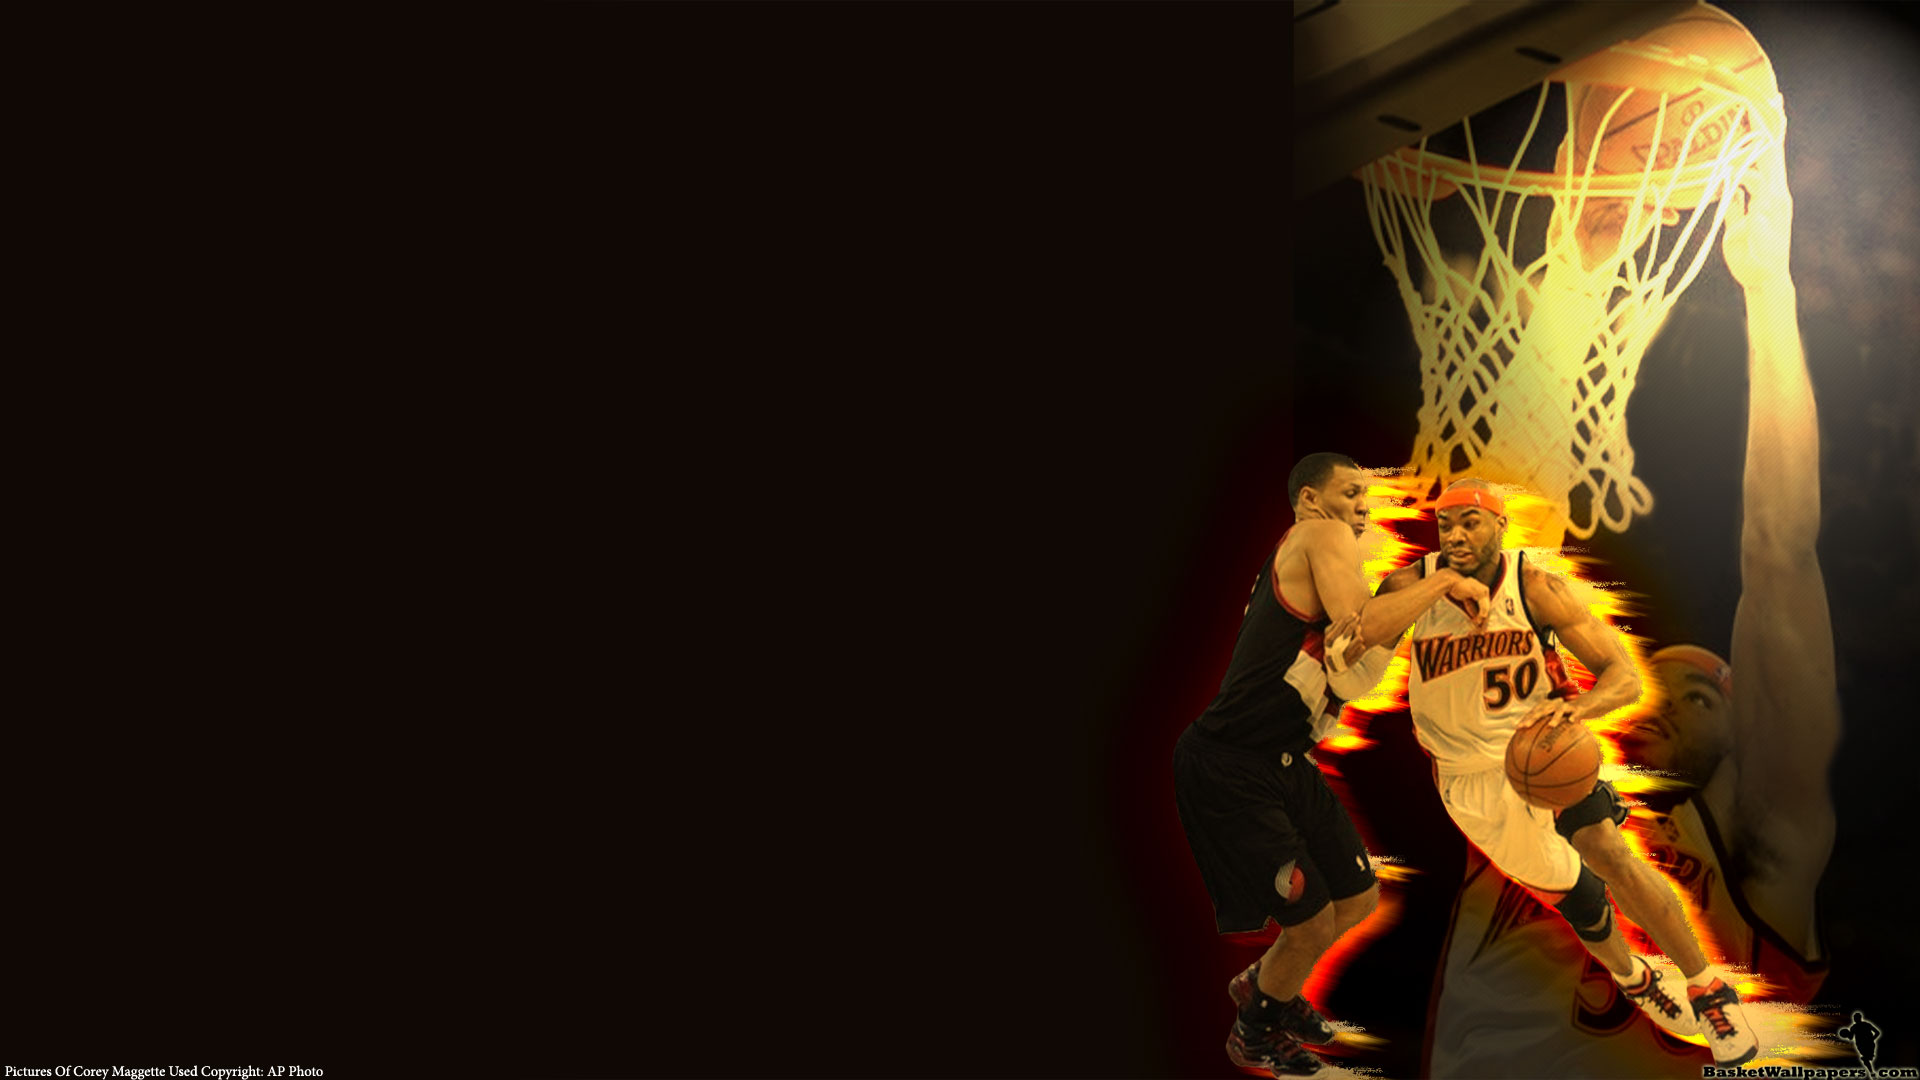 Widescreen Wallpaper Basketball Image